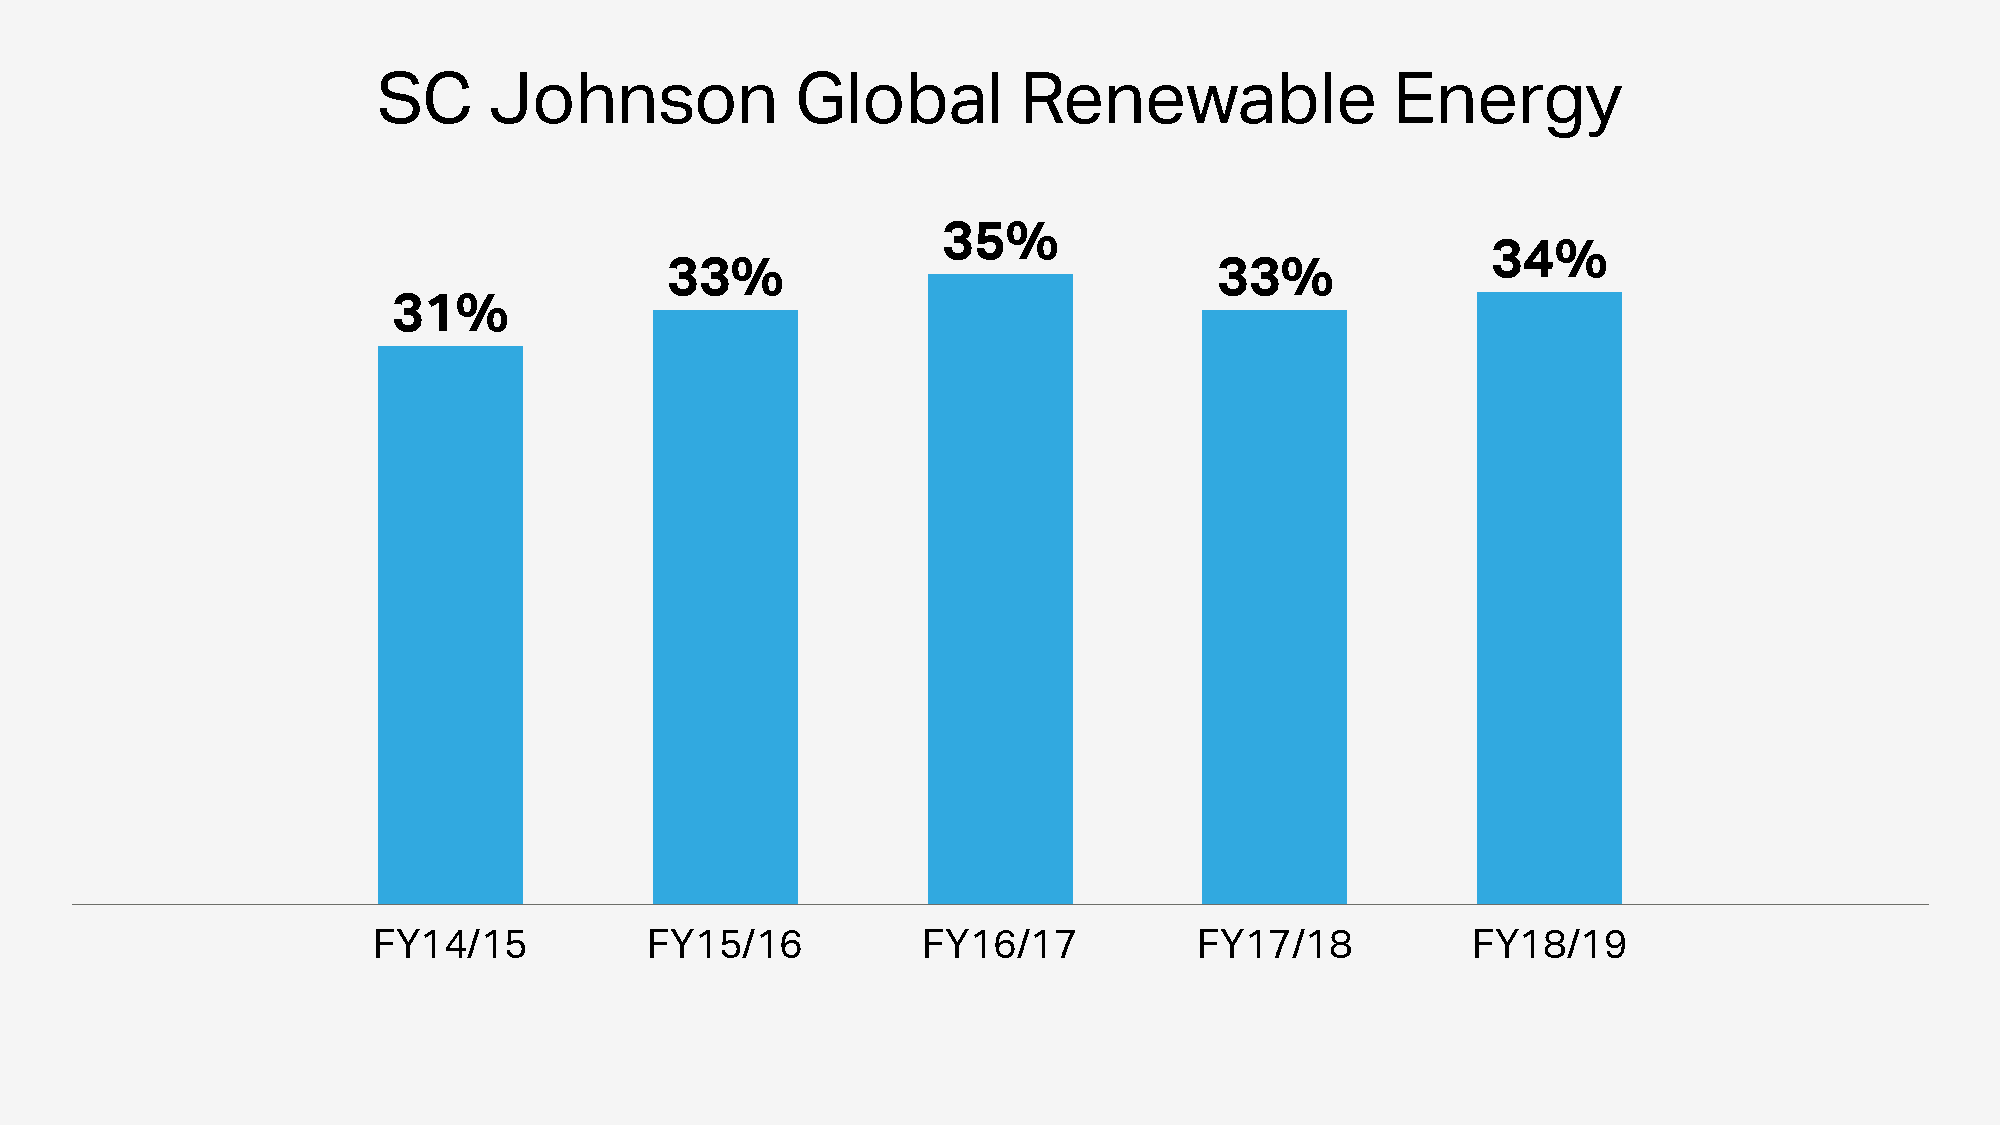 Energia renovável global na SC Johnson ao longo dos anos